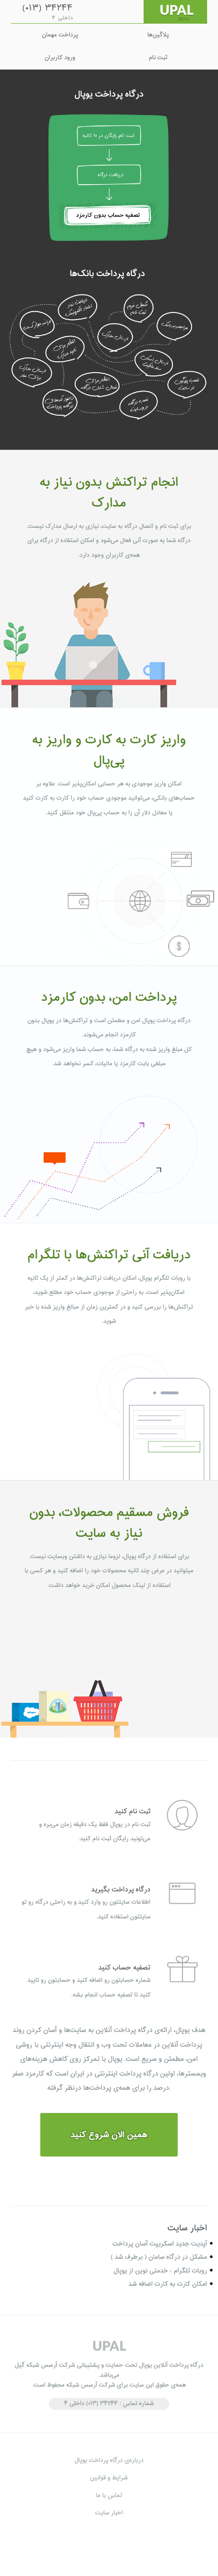 Upal payment gateway Iran ui design Website green landing page